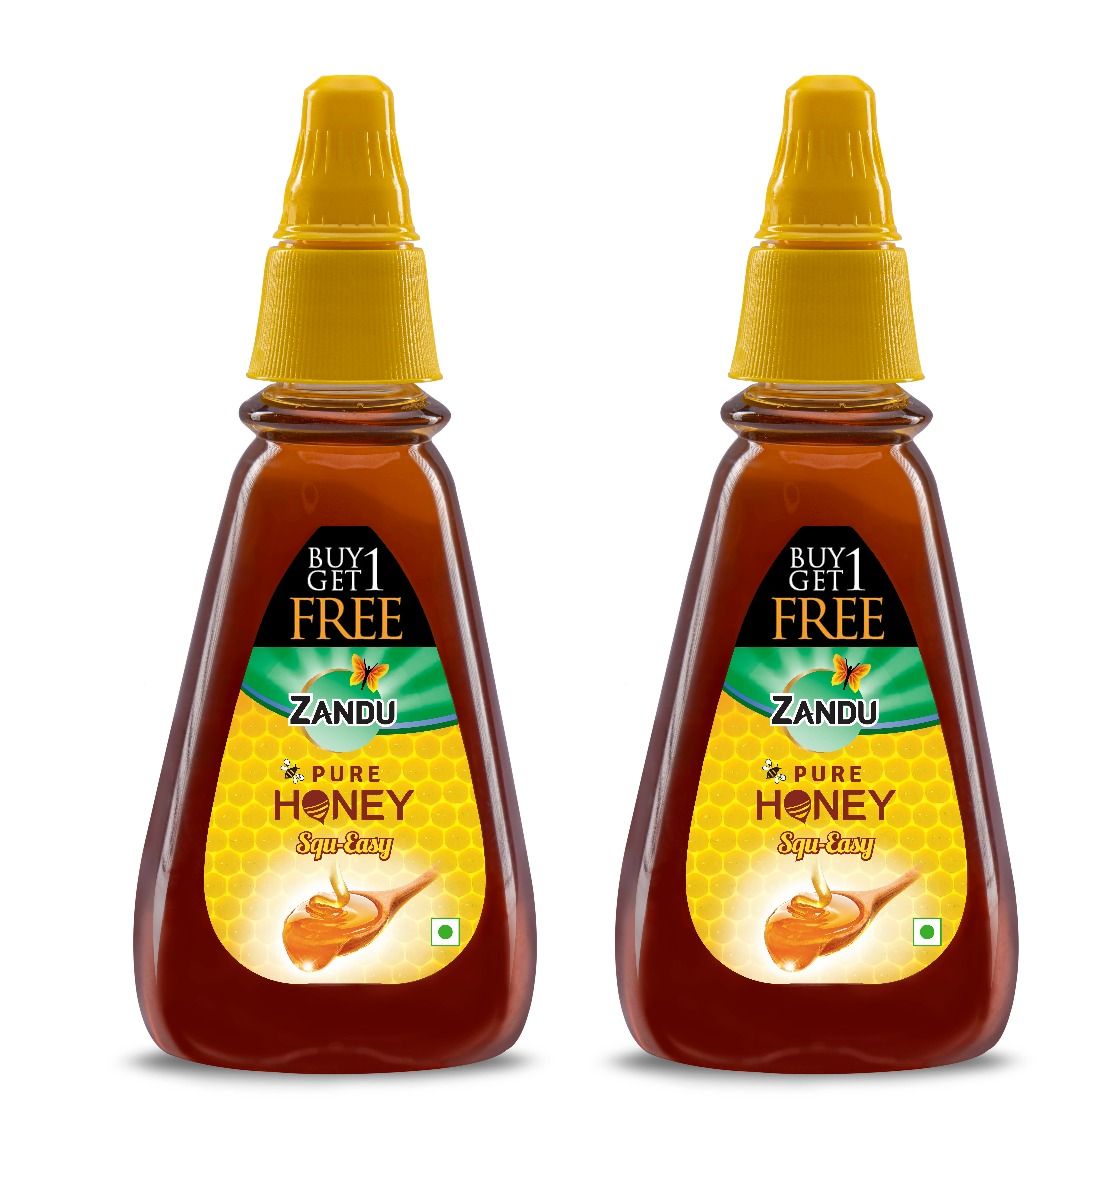 Buy Zandu Pure Honey 100% guaranteed purity Squ-Easy pack , Buy 1 Get 1 Free, 400 gm each Online